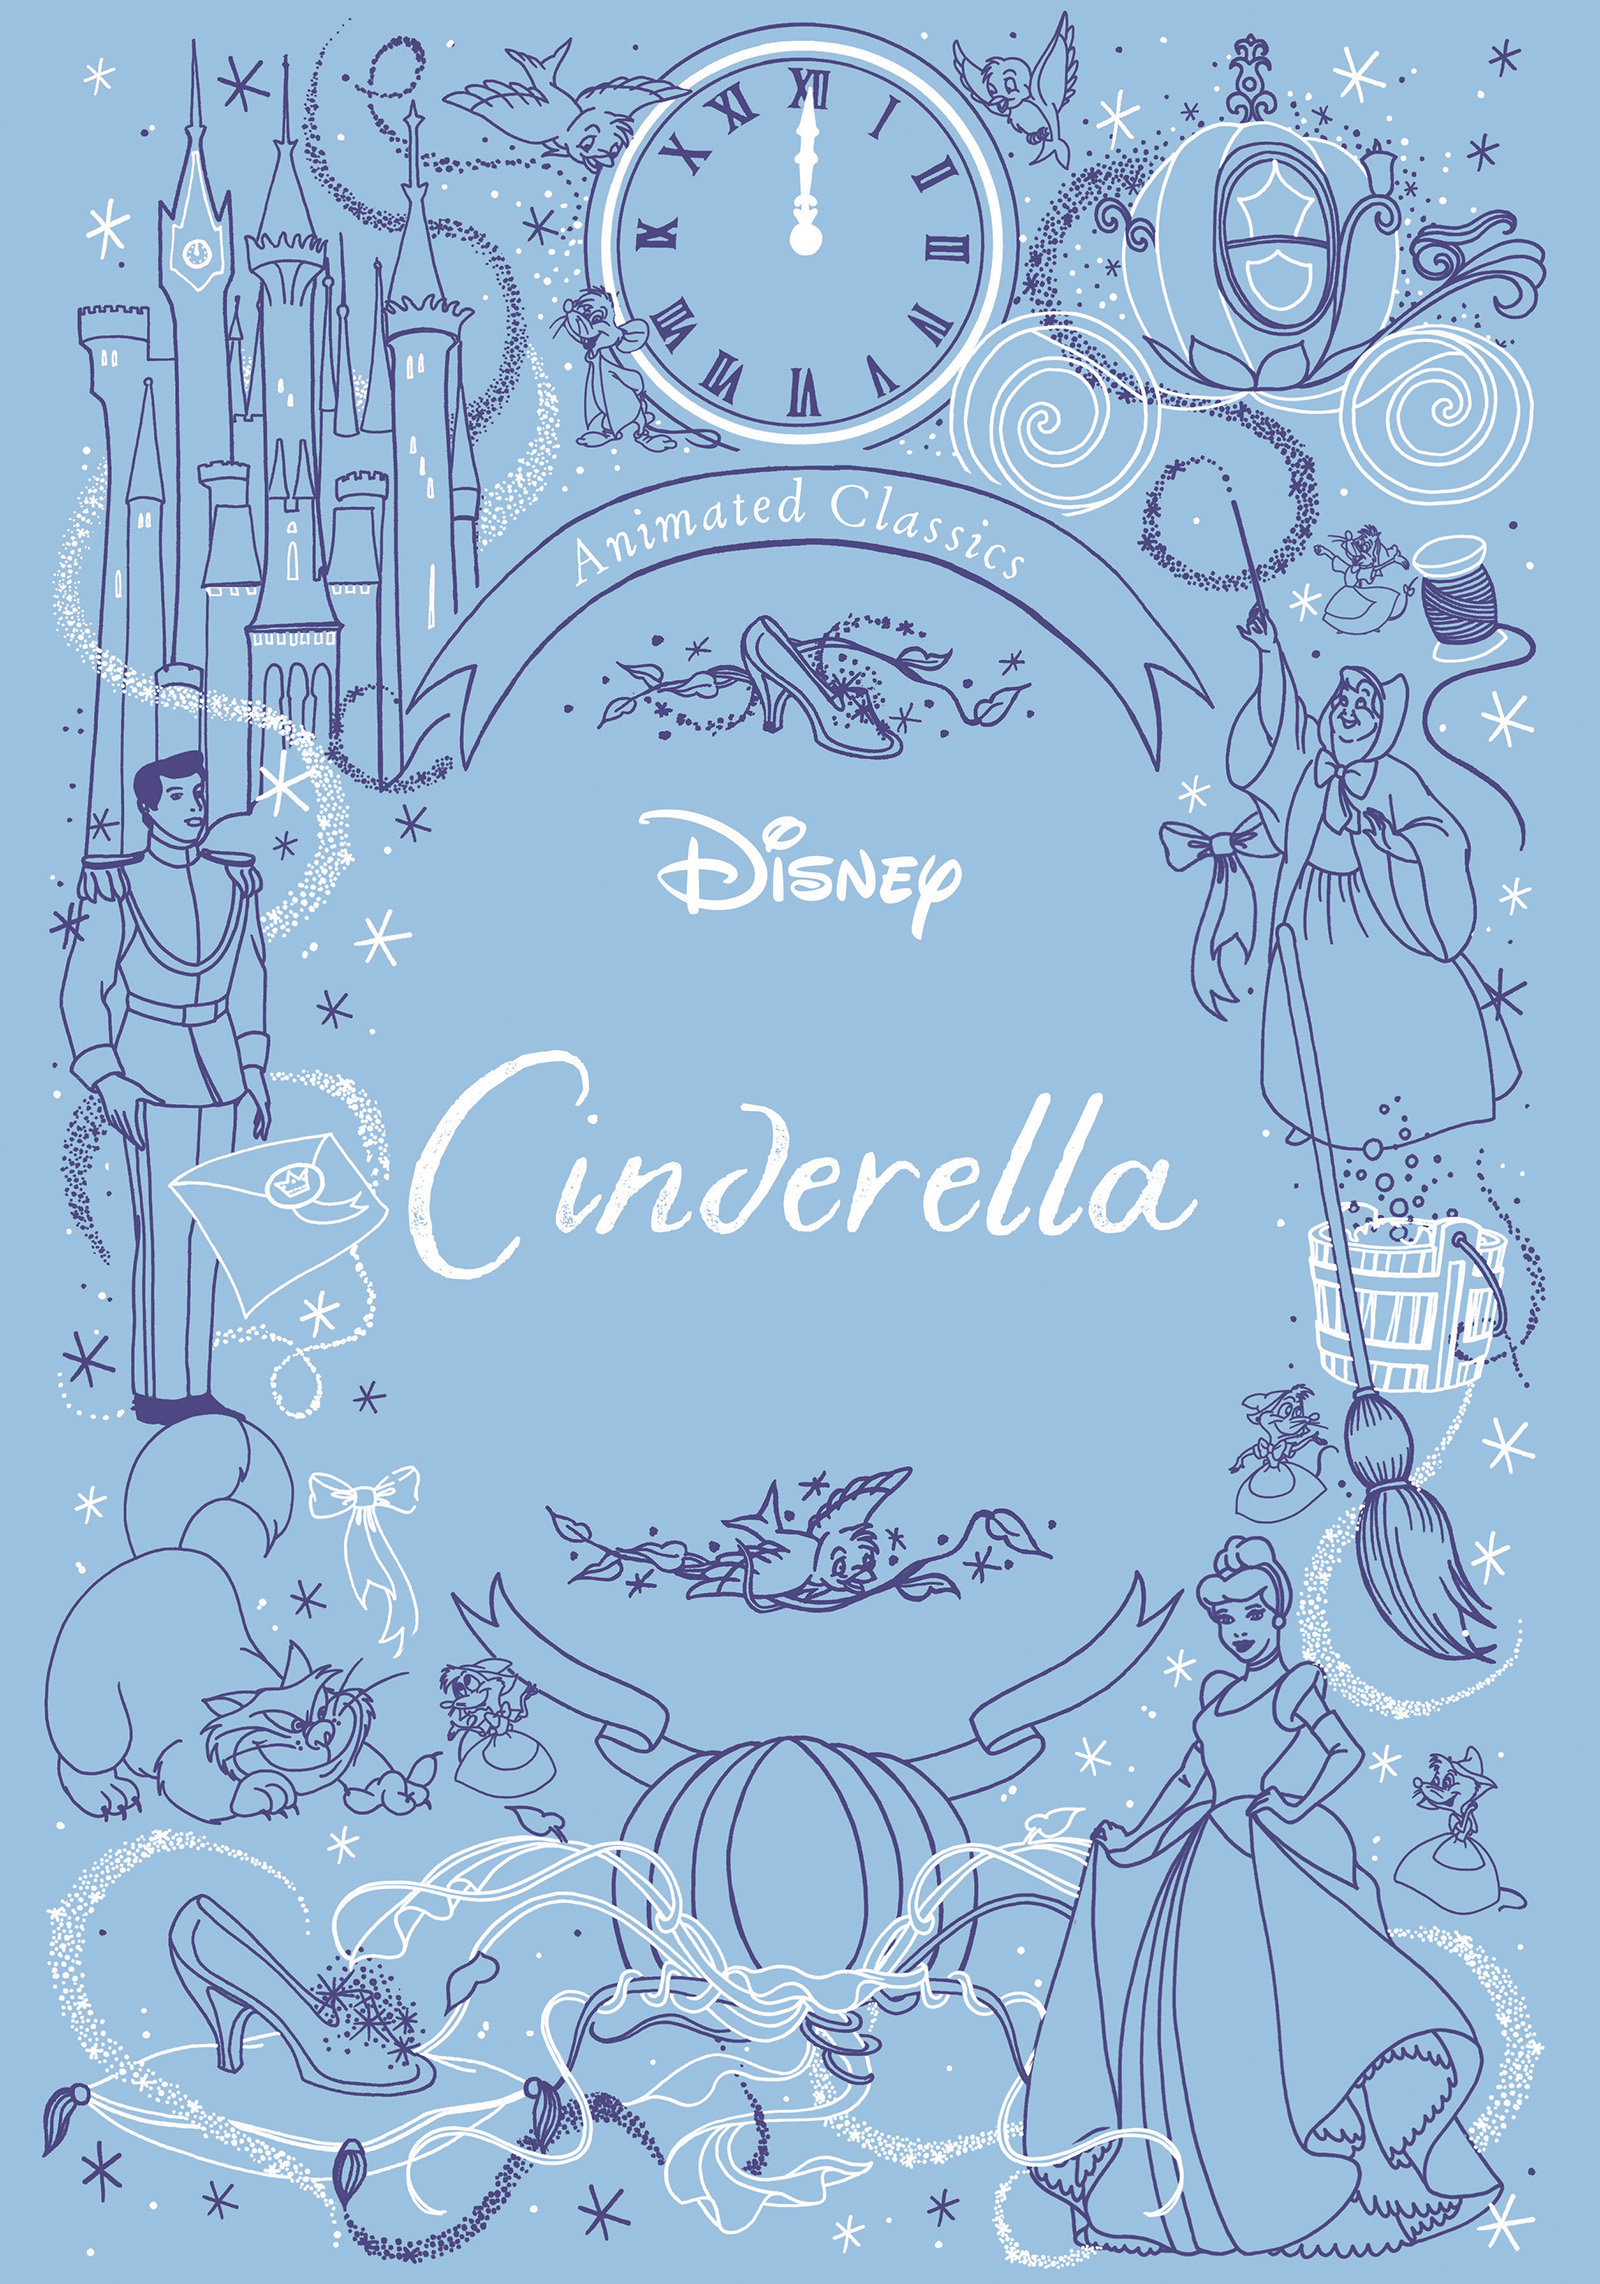 Disney Animated Classics Cinderella Hardcover